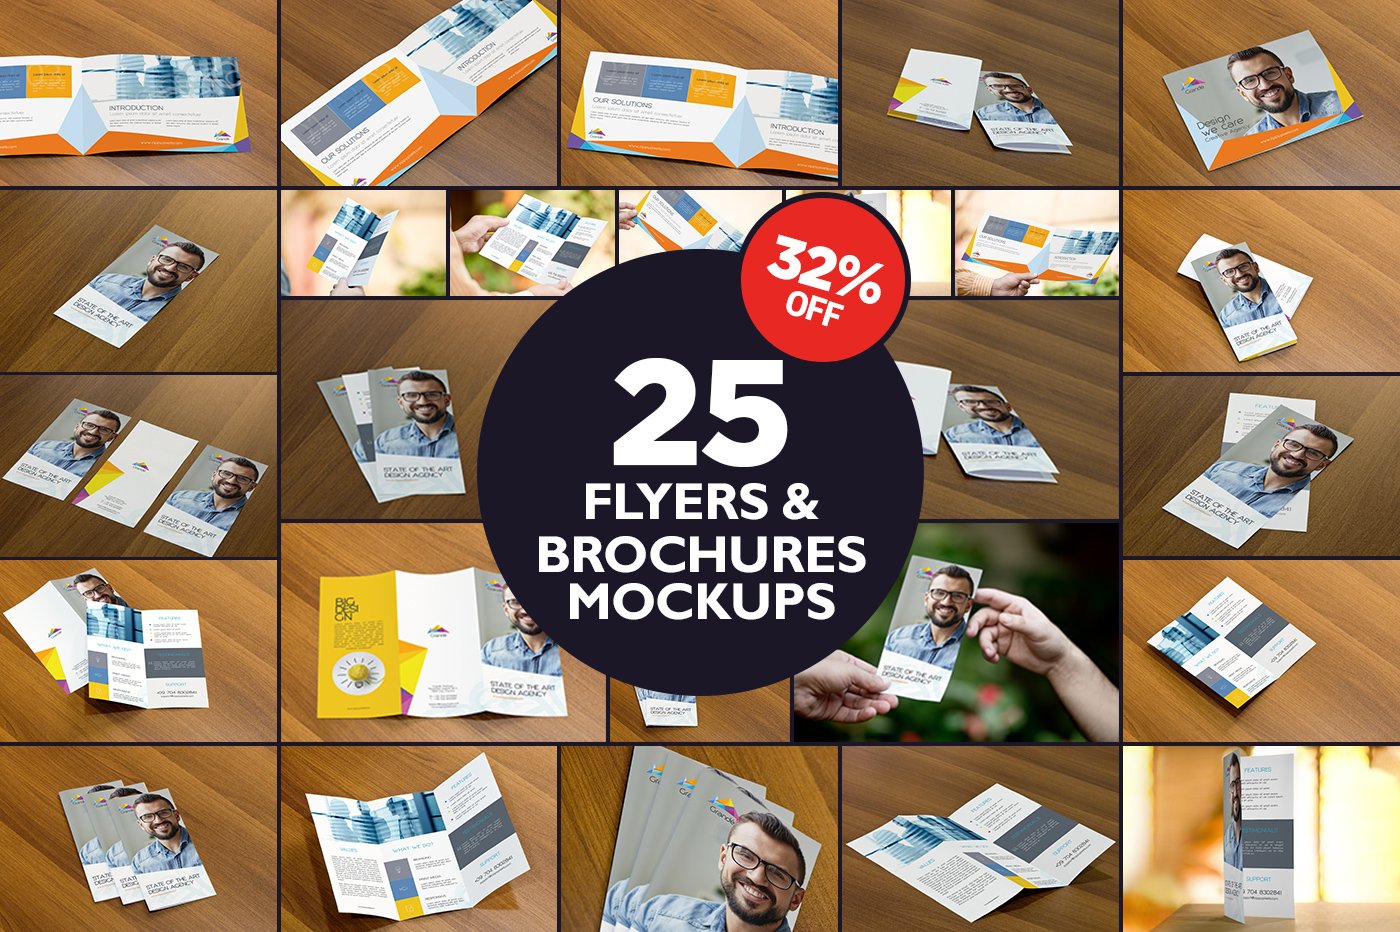 The Flyers & Brochures Mockup Bundle cover image.